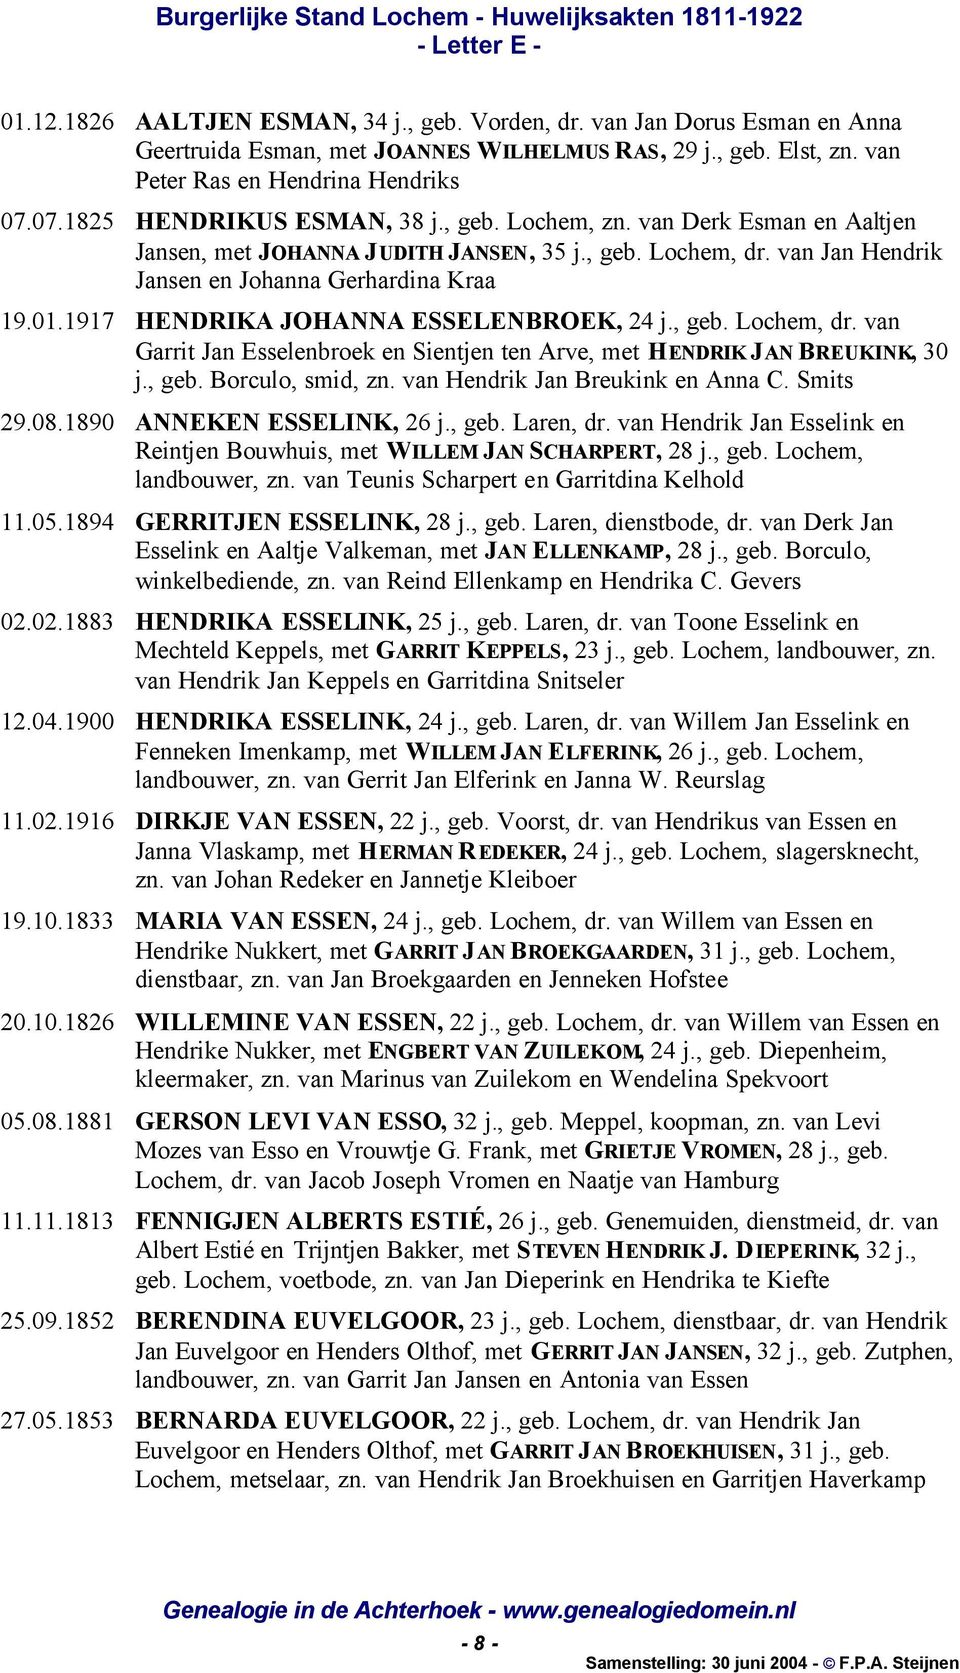 1917 HENDRIKA JOHANNA ESSELENBROEK, 24 j., geb. Lochem, dr. van Garrit Jan Esselenbroek en Sientjen ten Arve, met HENDRIK JAN BREUKINK, 30 j., geb. Borculo, smid, zn.